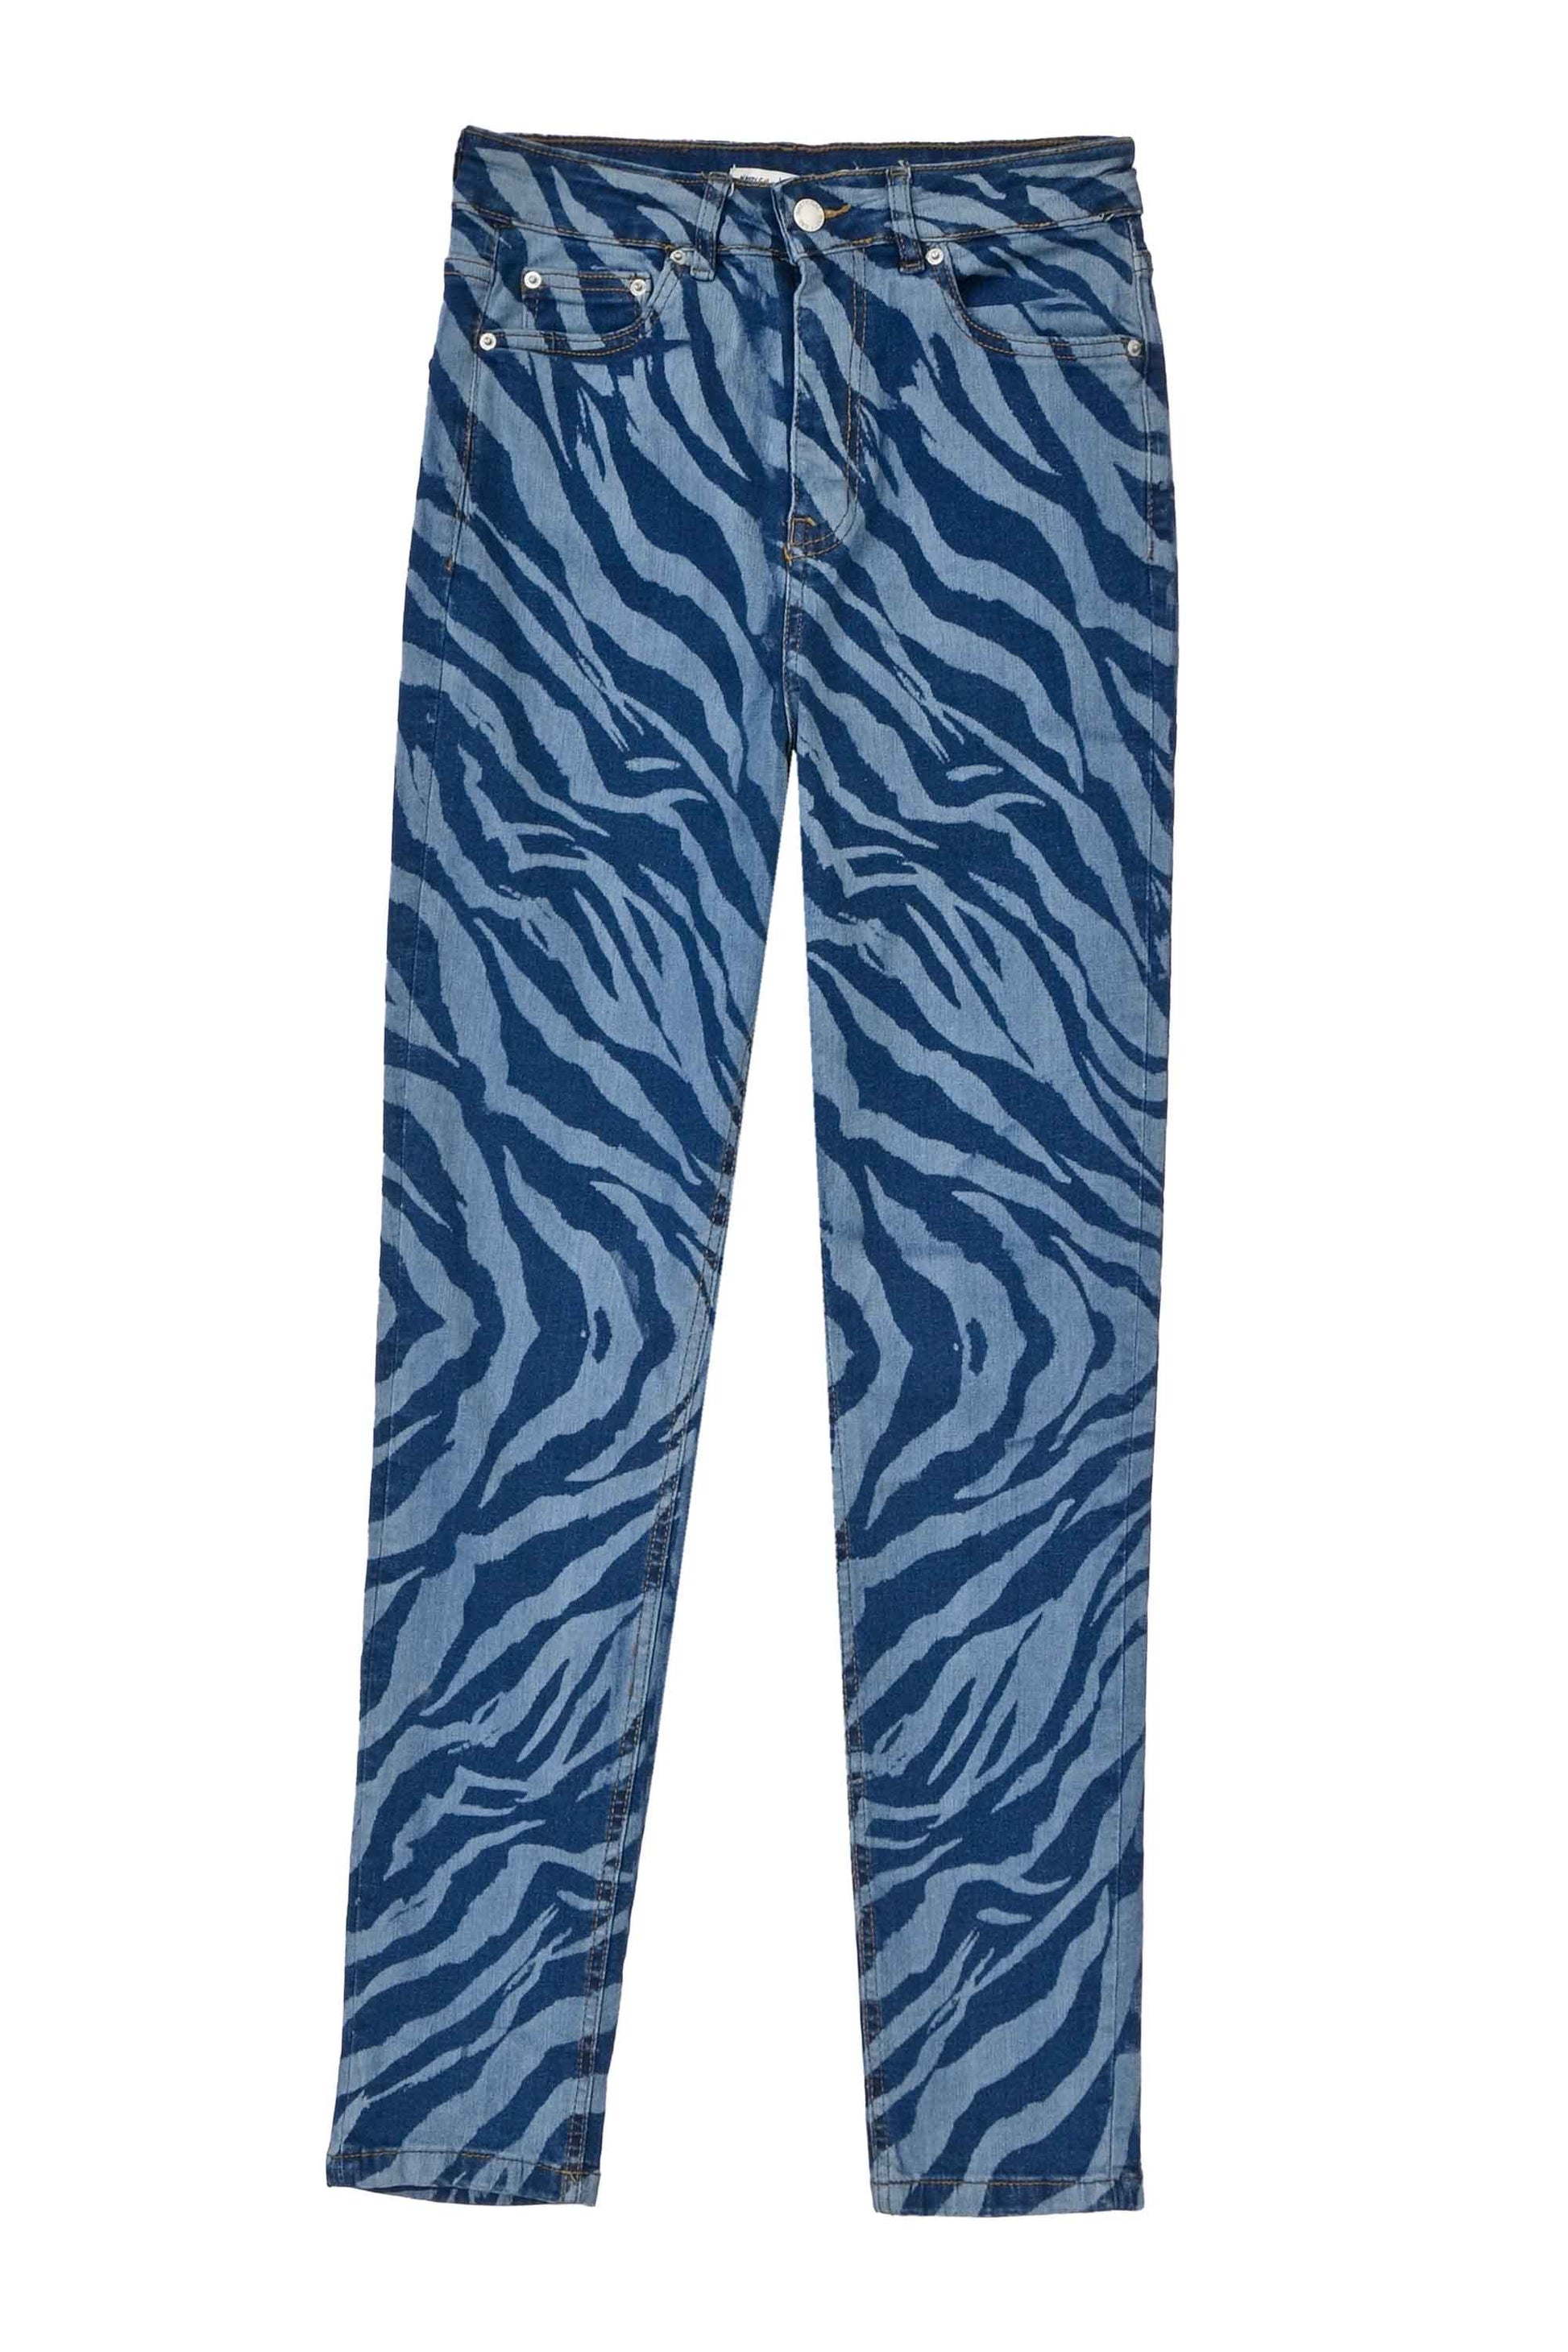 Nasty Gal Women's Zebra Printed Skinny Jeans Women's Denim HAS Apparel 